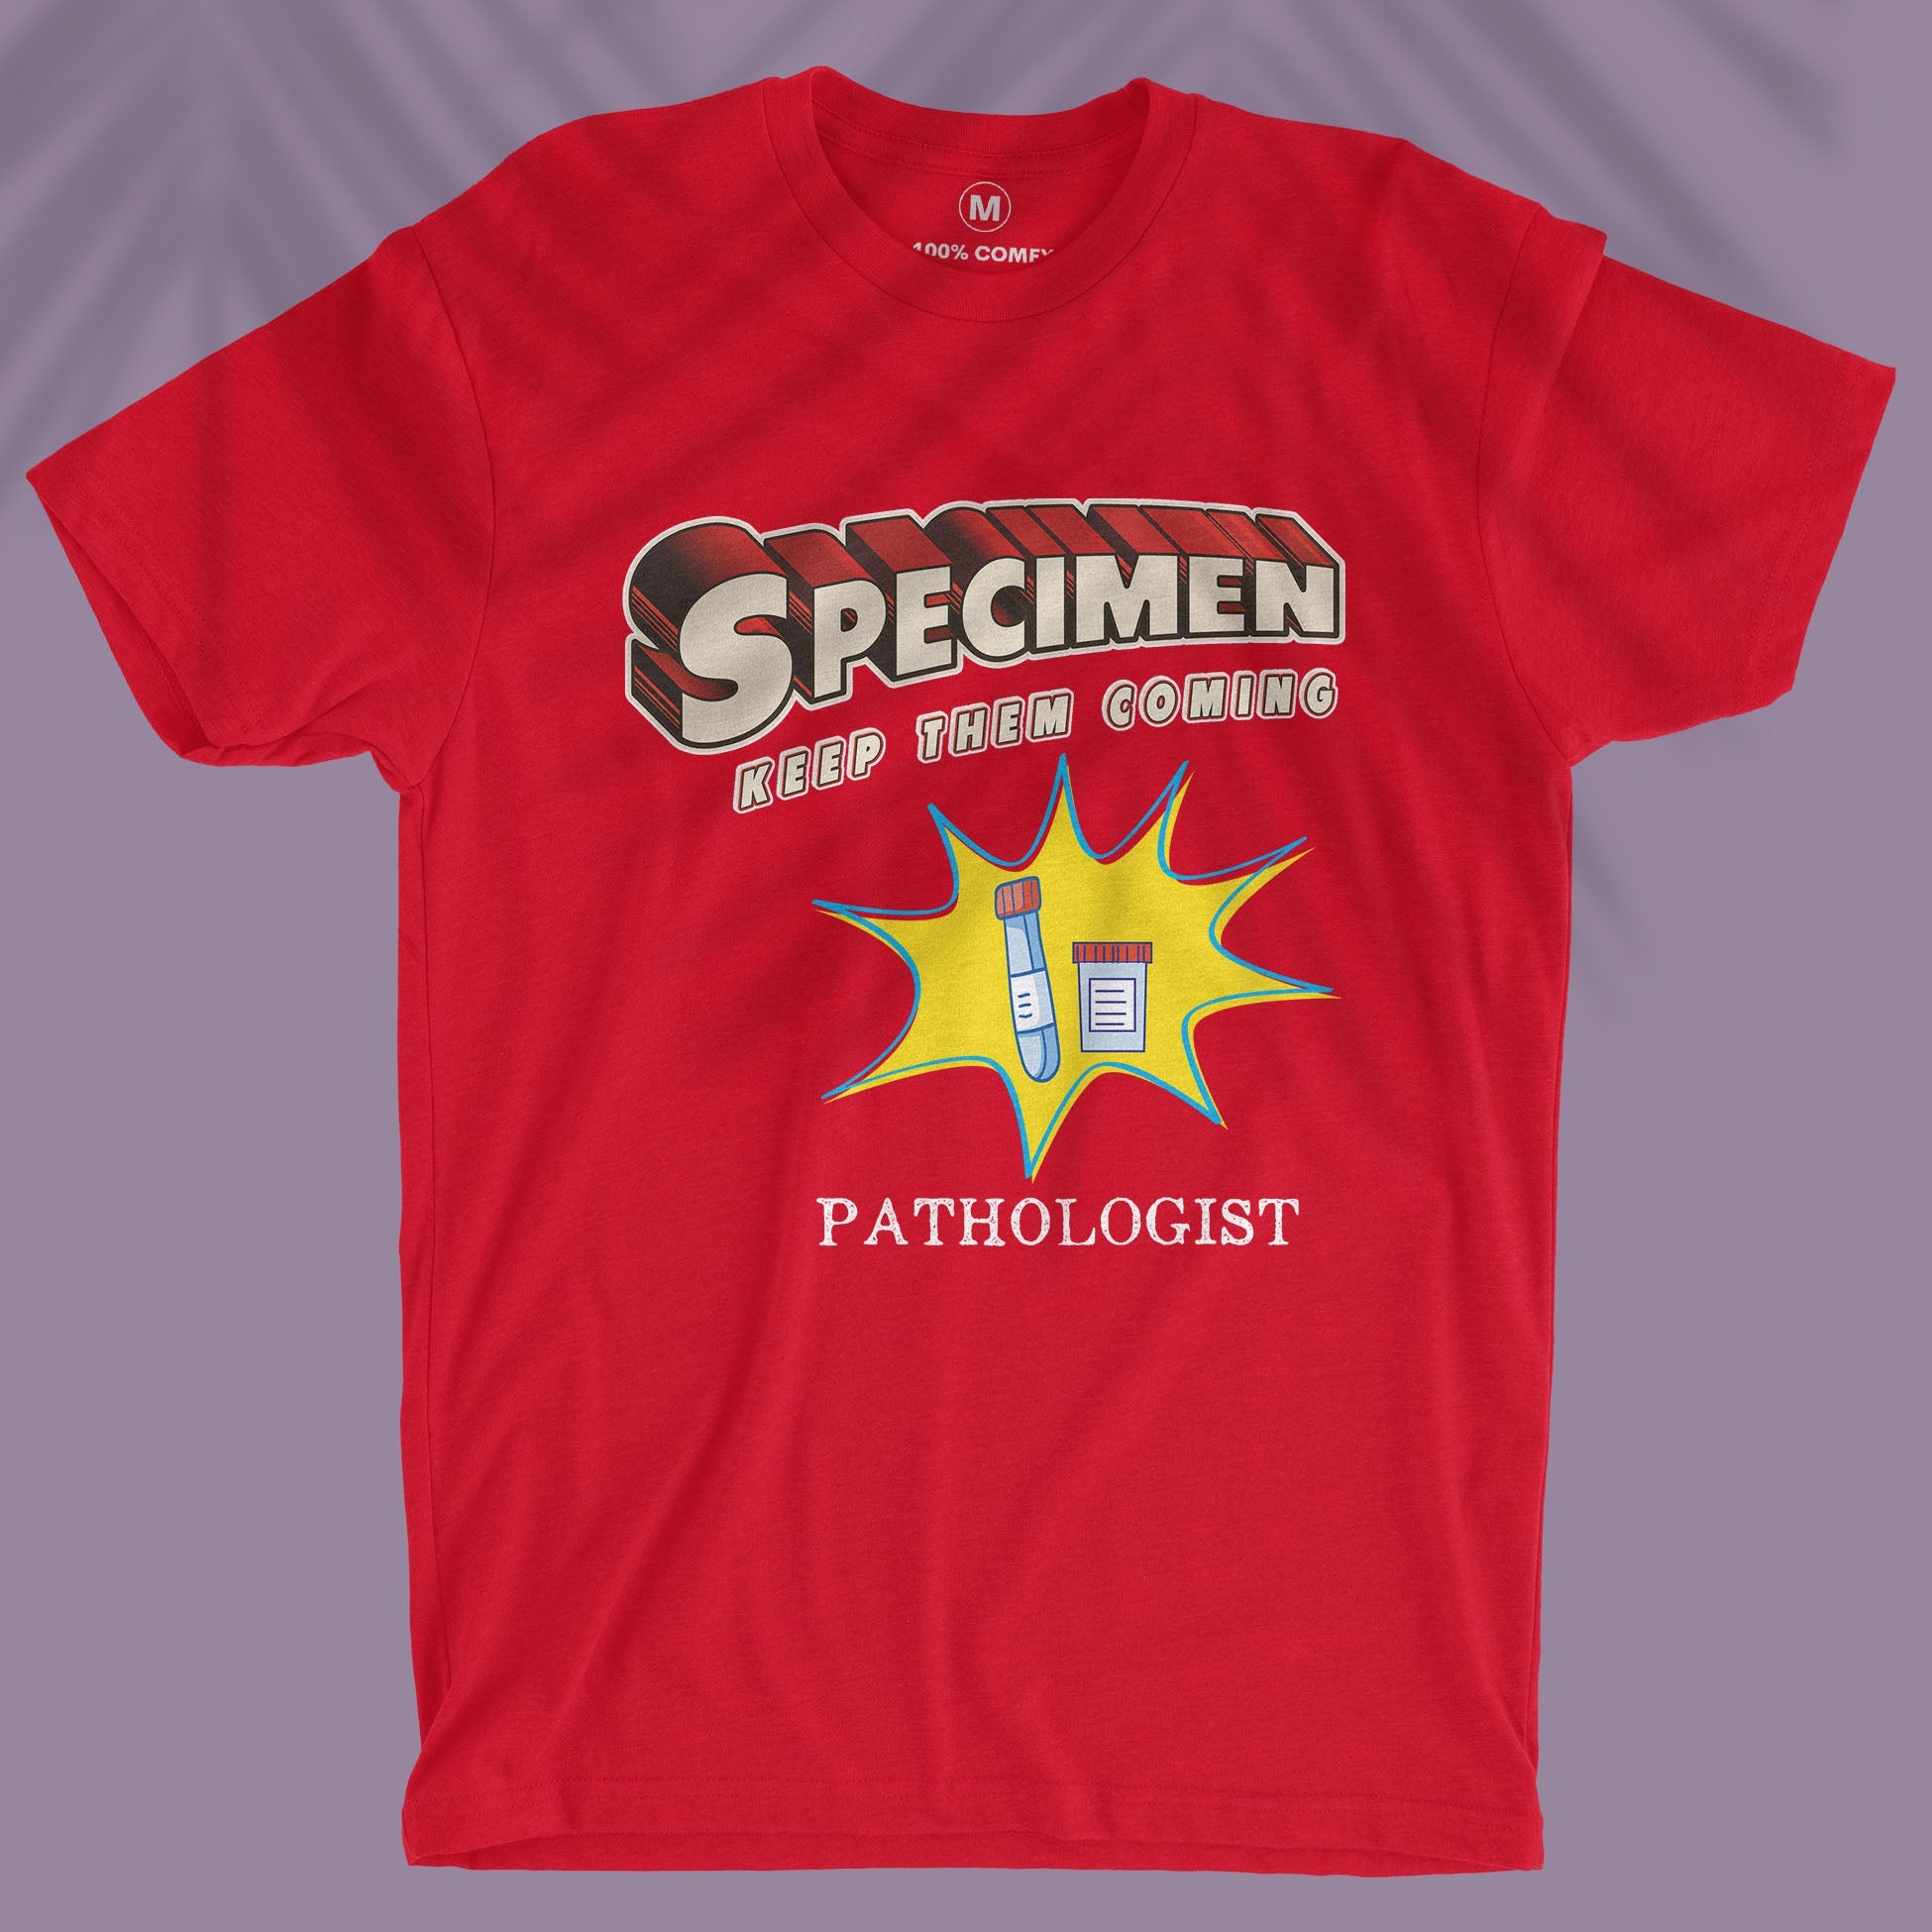 Specimen - Unisex T-shirt